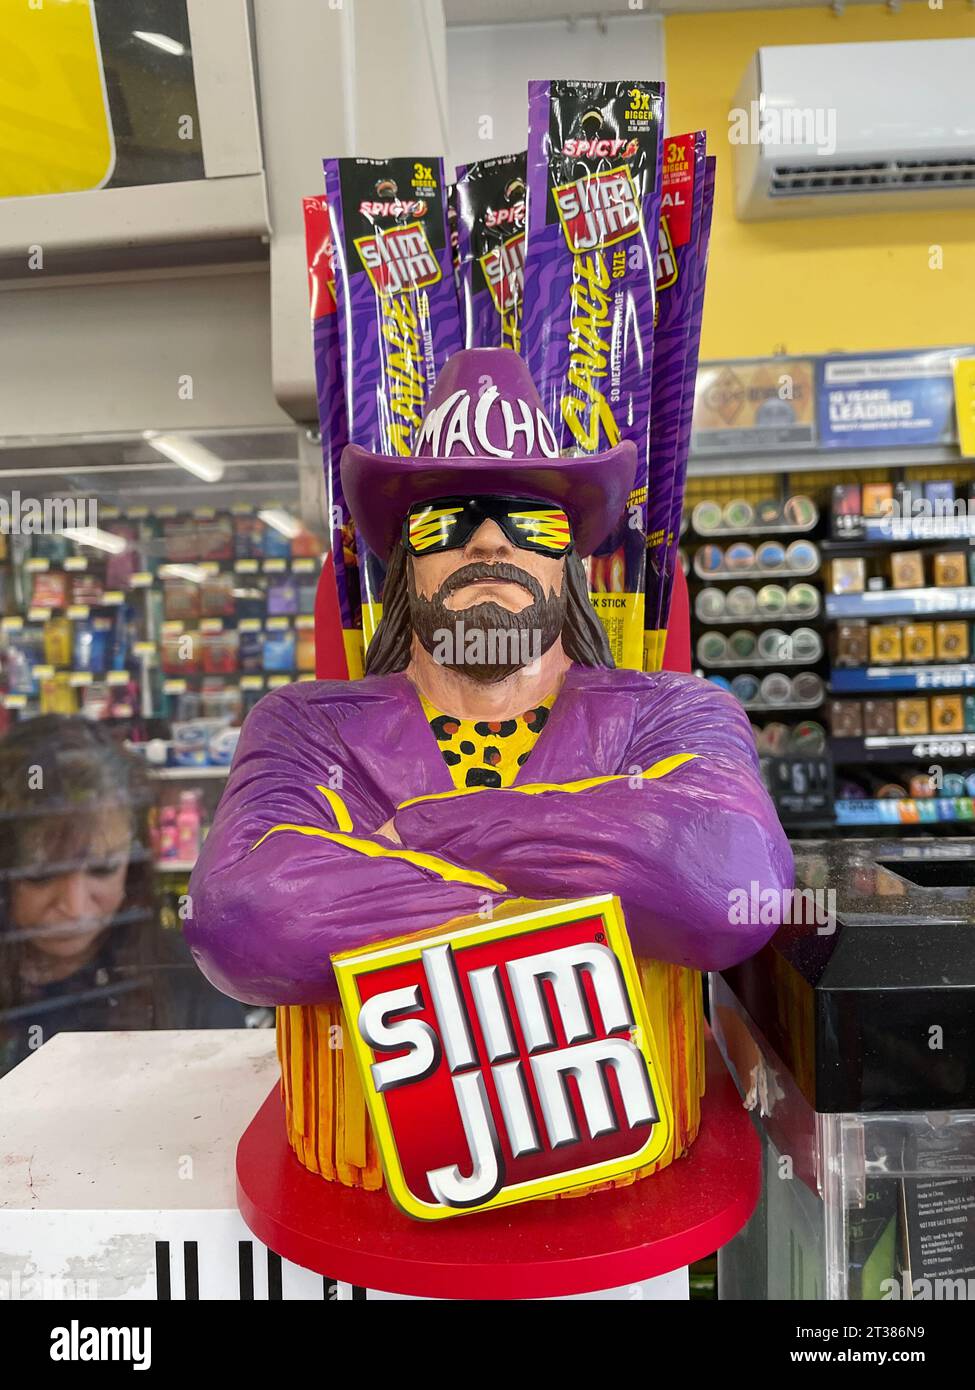 Grovetown, Ga USA - 08 06 23: Gas Pro convenience store Randy Macho man savage Slim Jim display Stock Photo